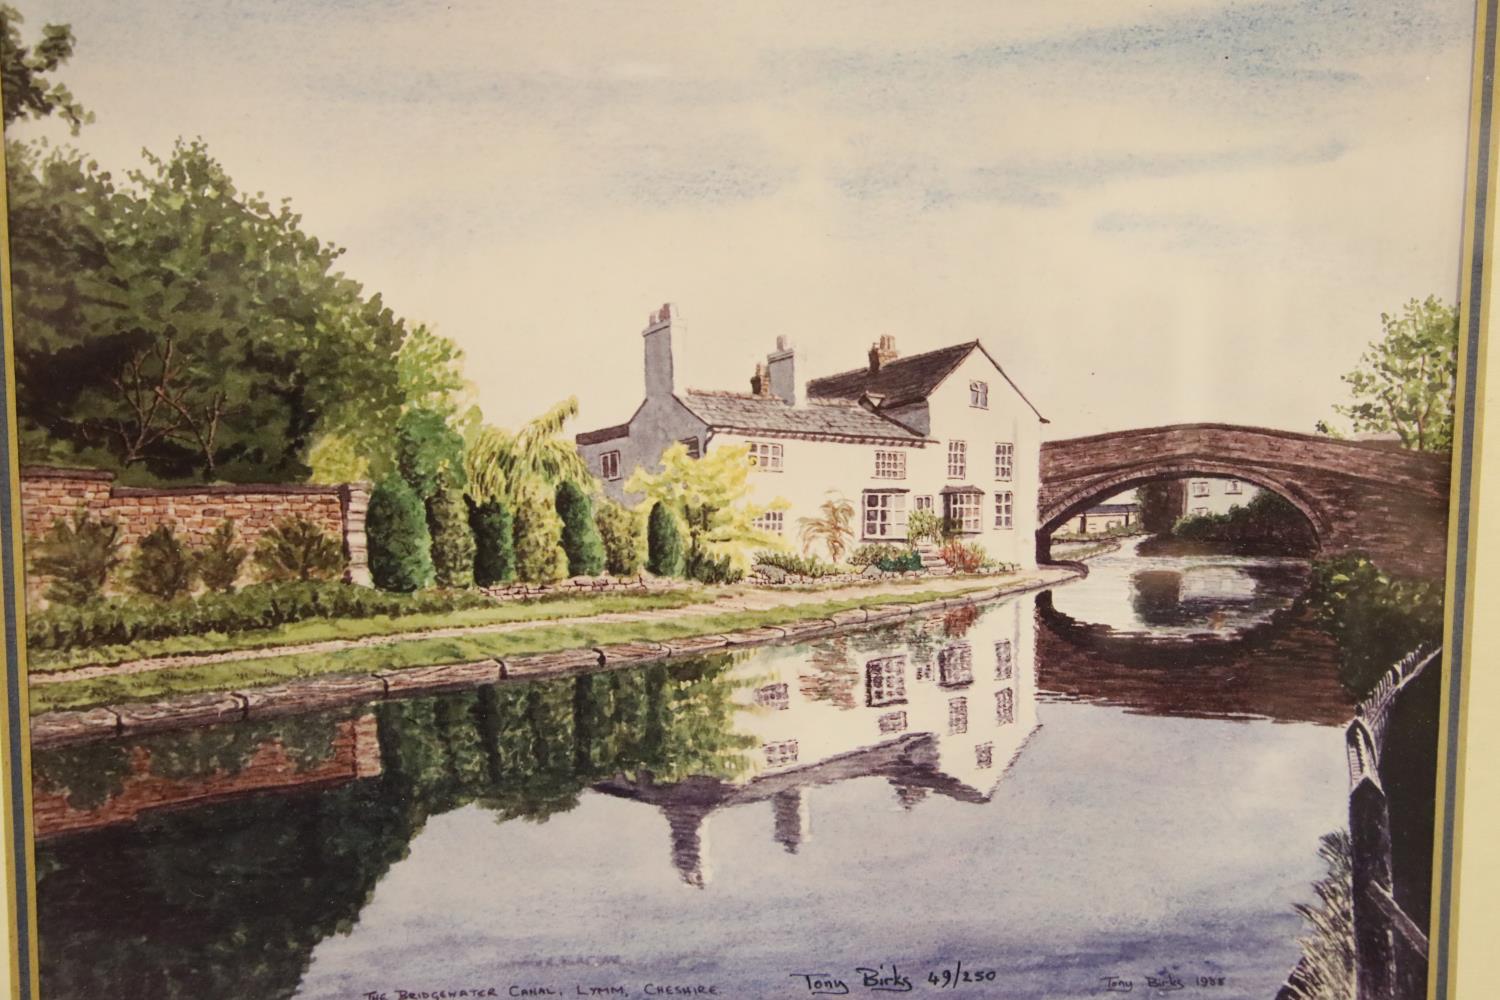 Tony Birks limited edition print of the Bridgewater Canal, Lymm 1988, 49/250, 28 x 24 cm. Not